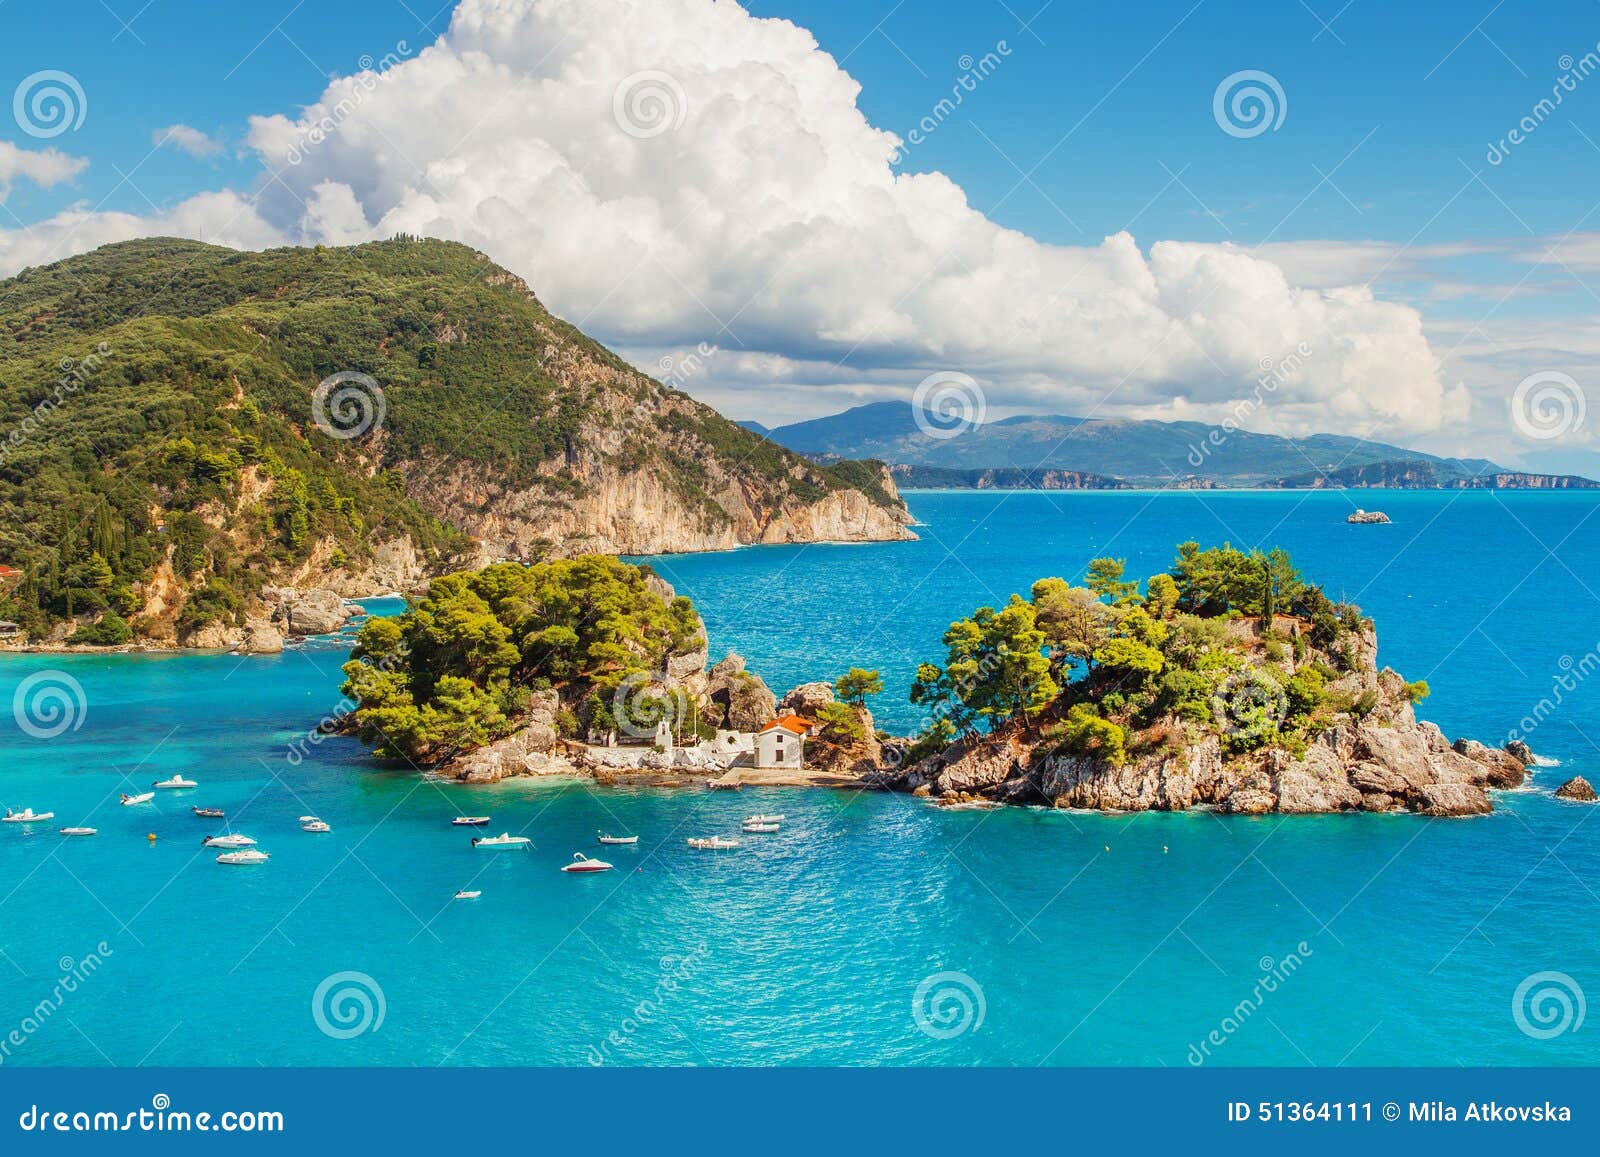 the islet of virgin mary, parga, greece